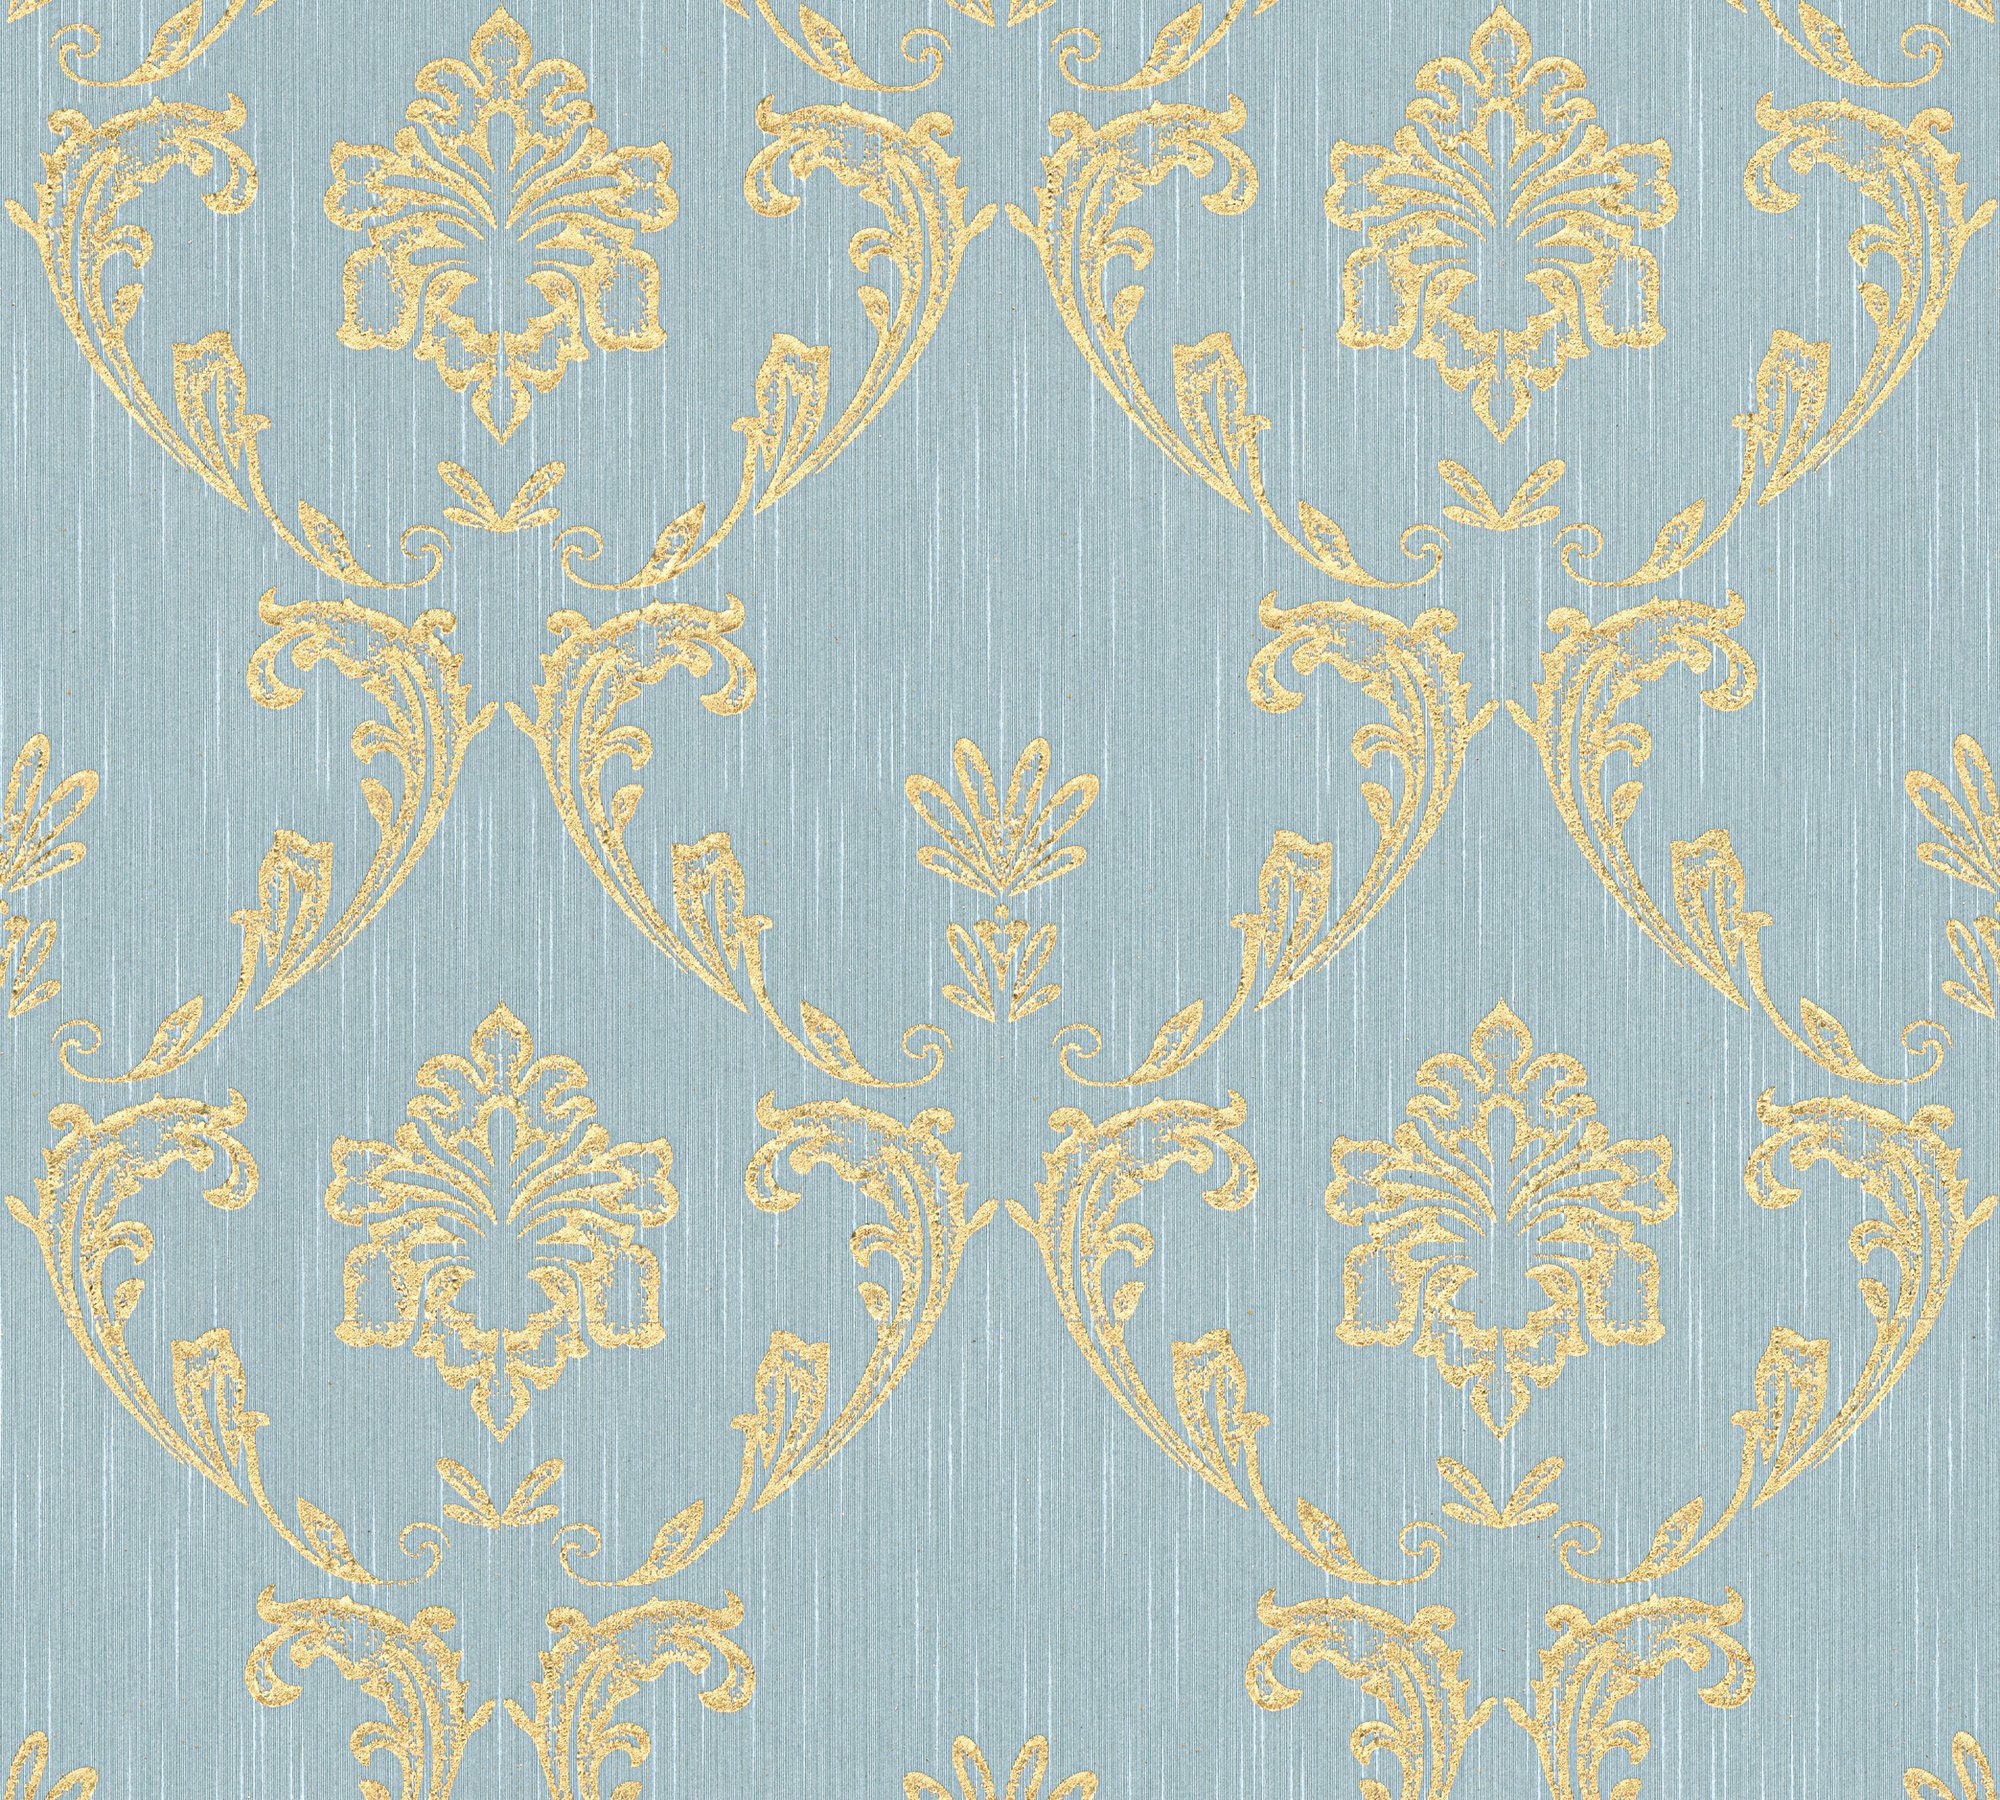 Tapete Paper Metallic gold/blau/grün Barock Barock, Ornament Architects matt, Silk, samtig, Textiltapete glänzend,